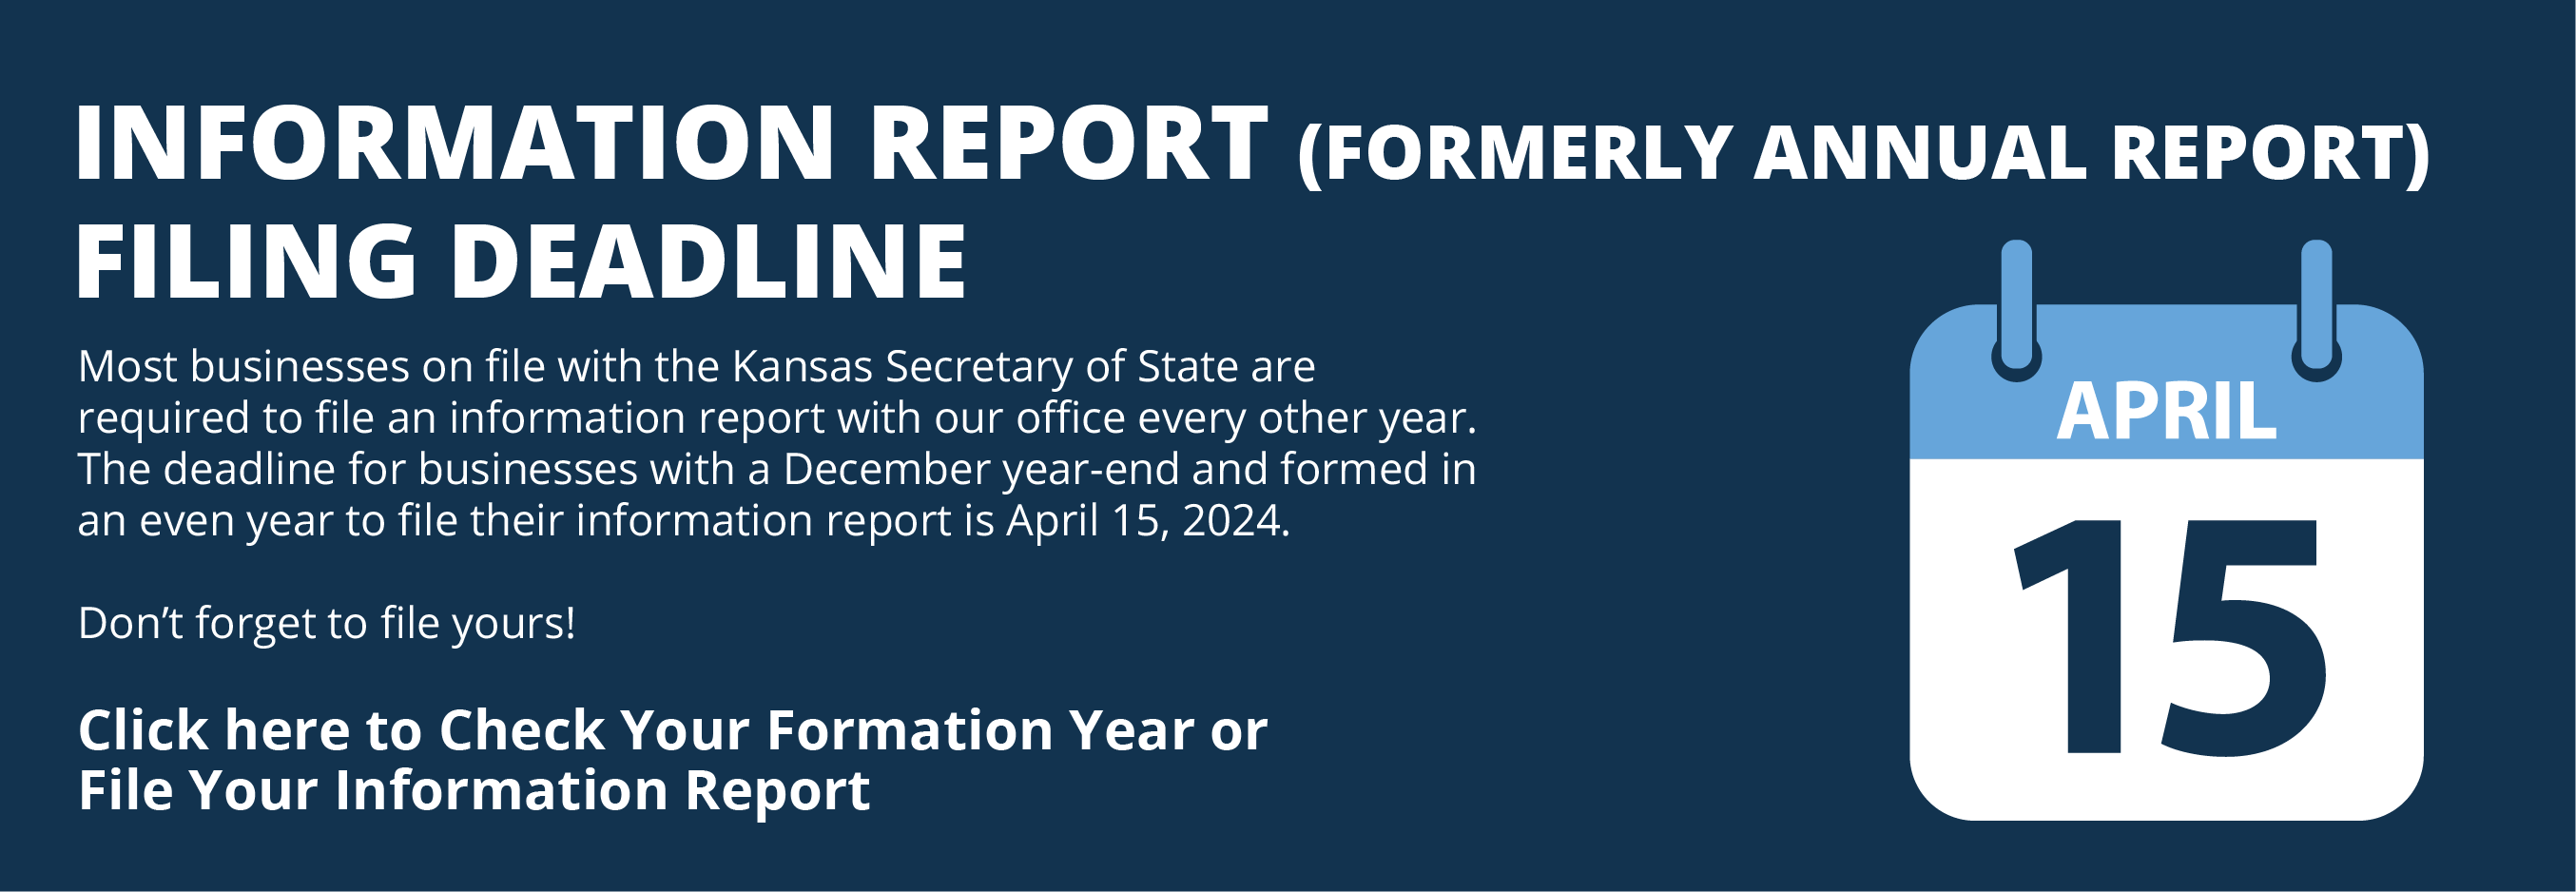 Information Report image